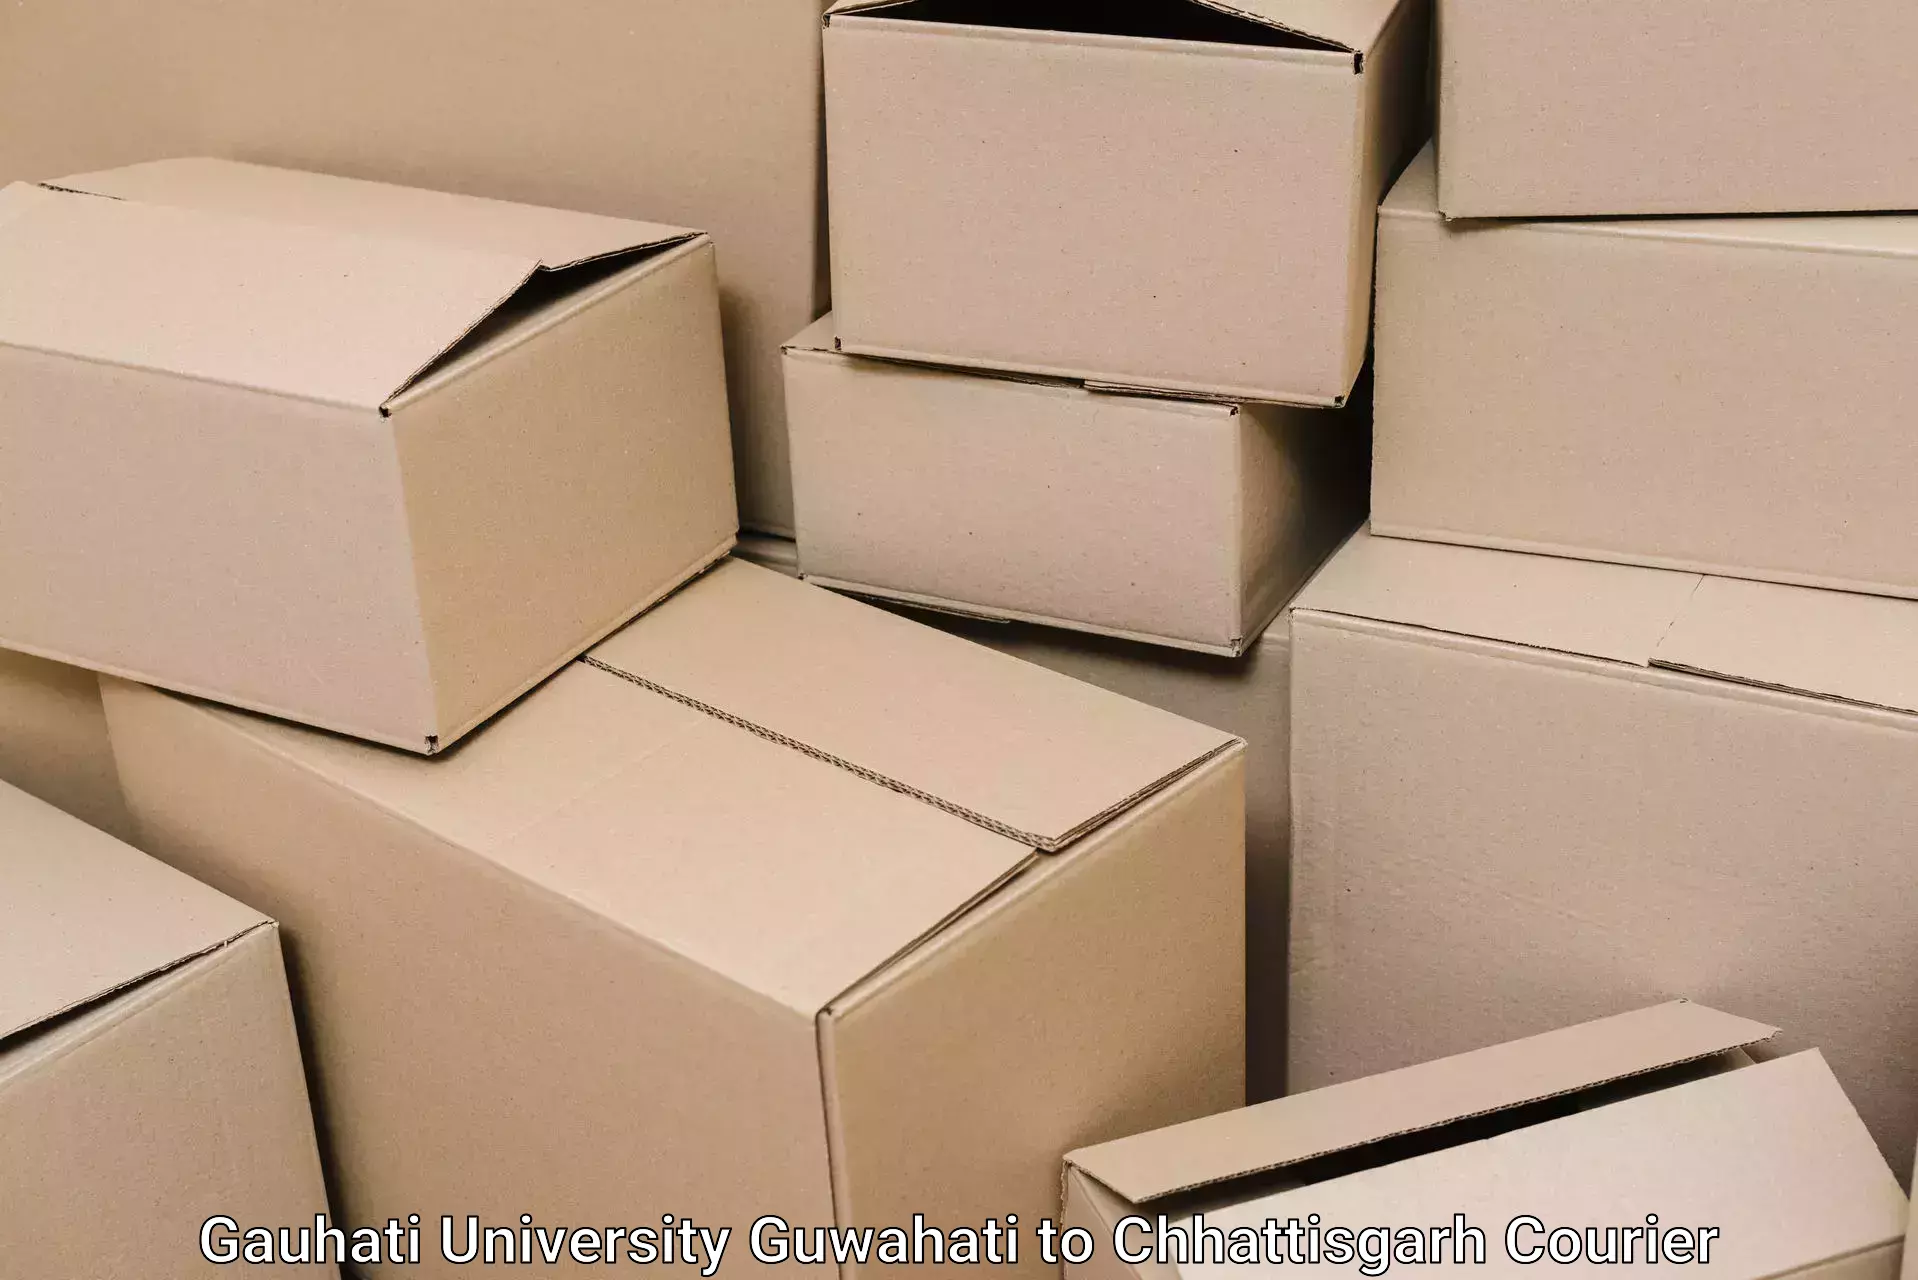 Packing and moving services Gauhati University Guwahati to Bilaspur